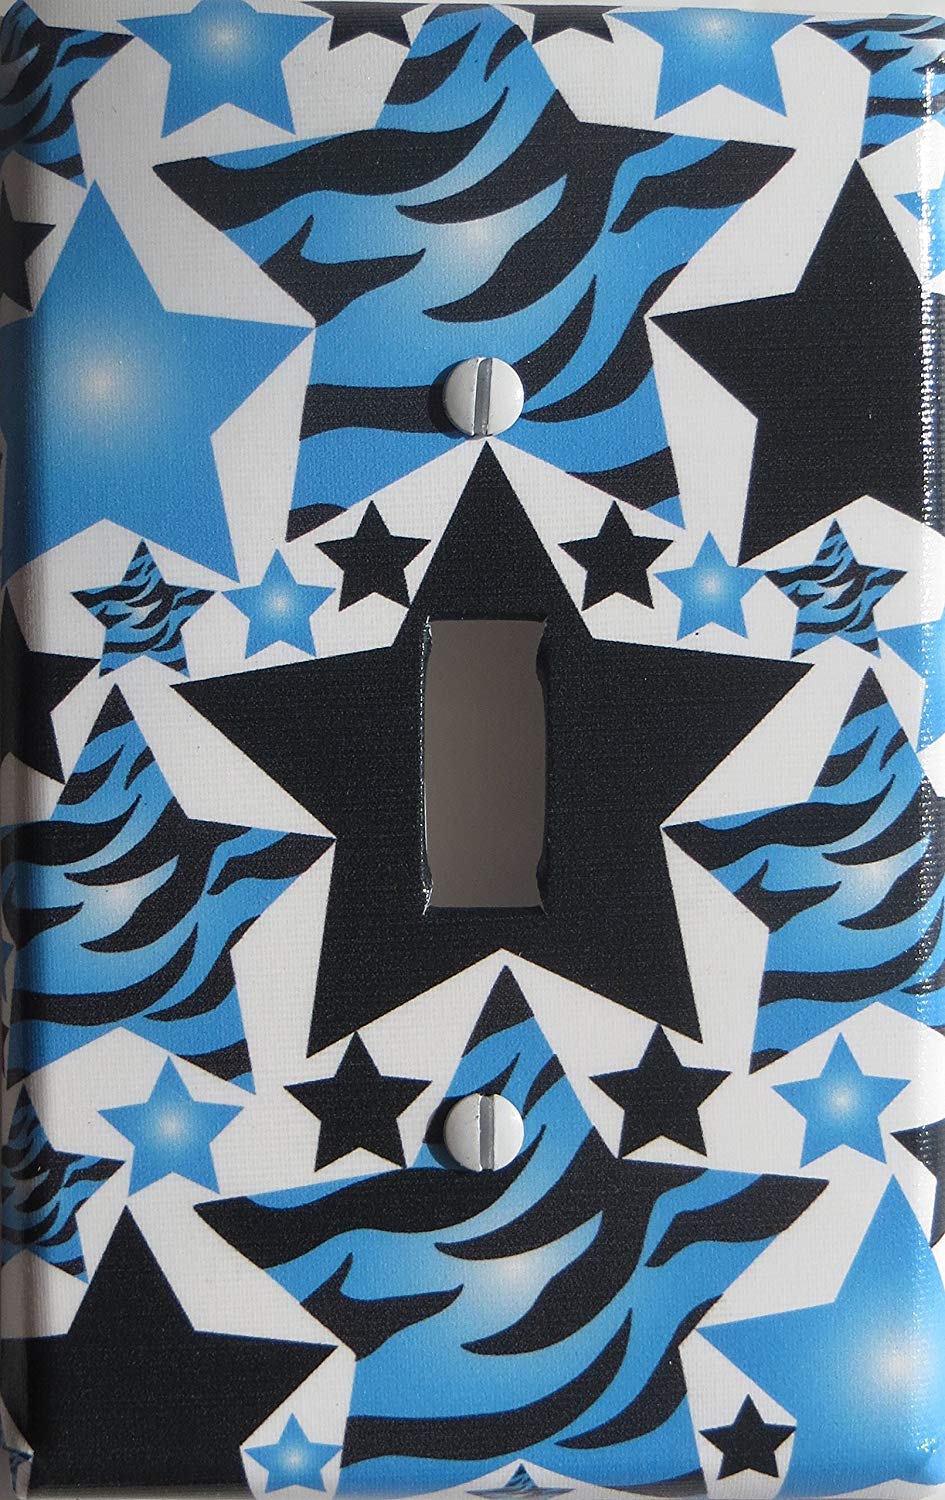 Blue Zebra Print Star Light Switch Plate Cover